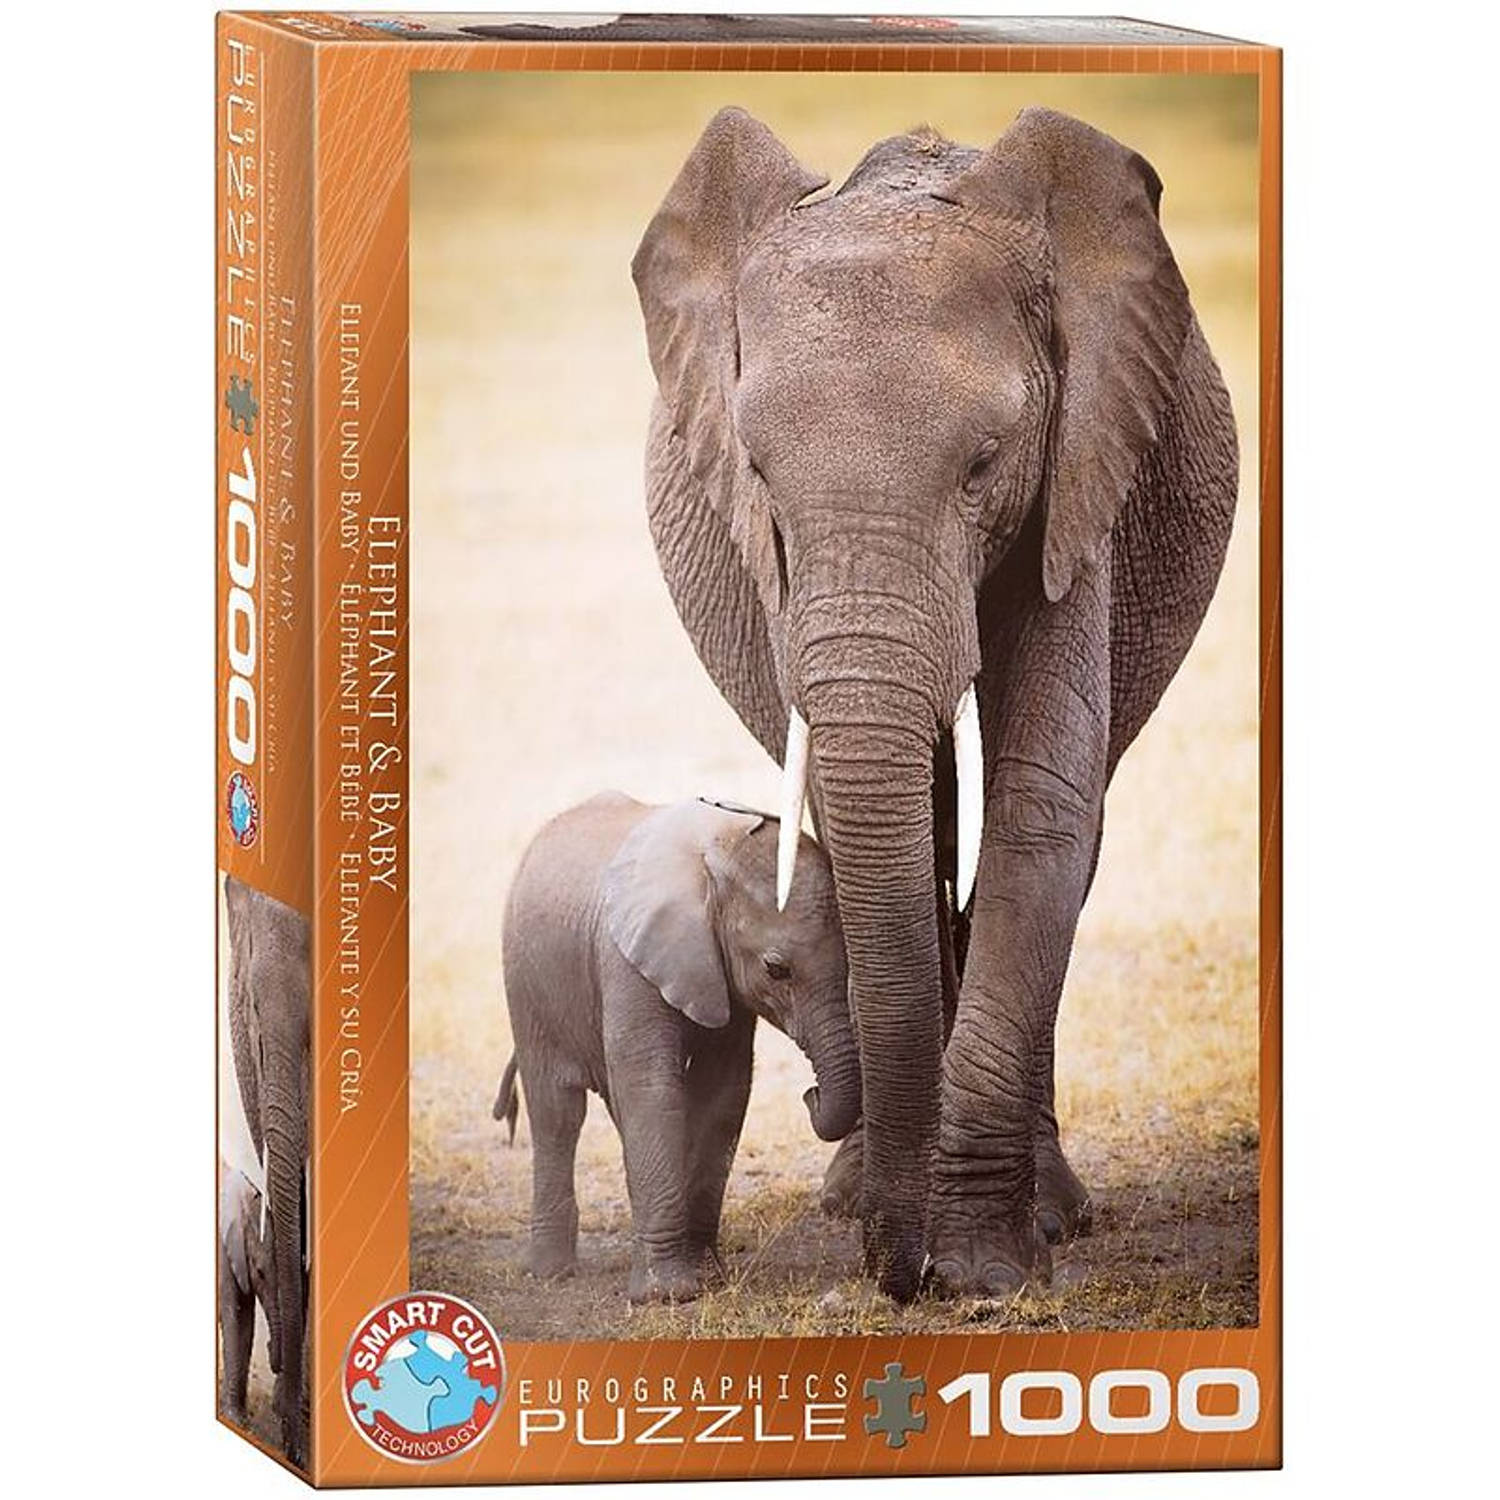 Eurographics puzzel Elephant & Baby - 1000 stukjes 3986166